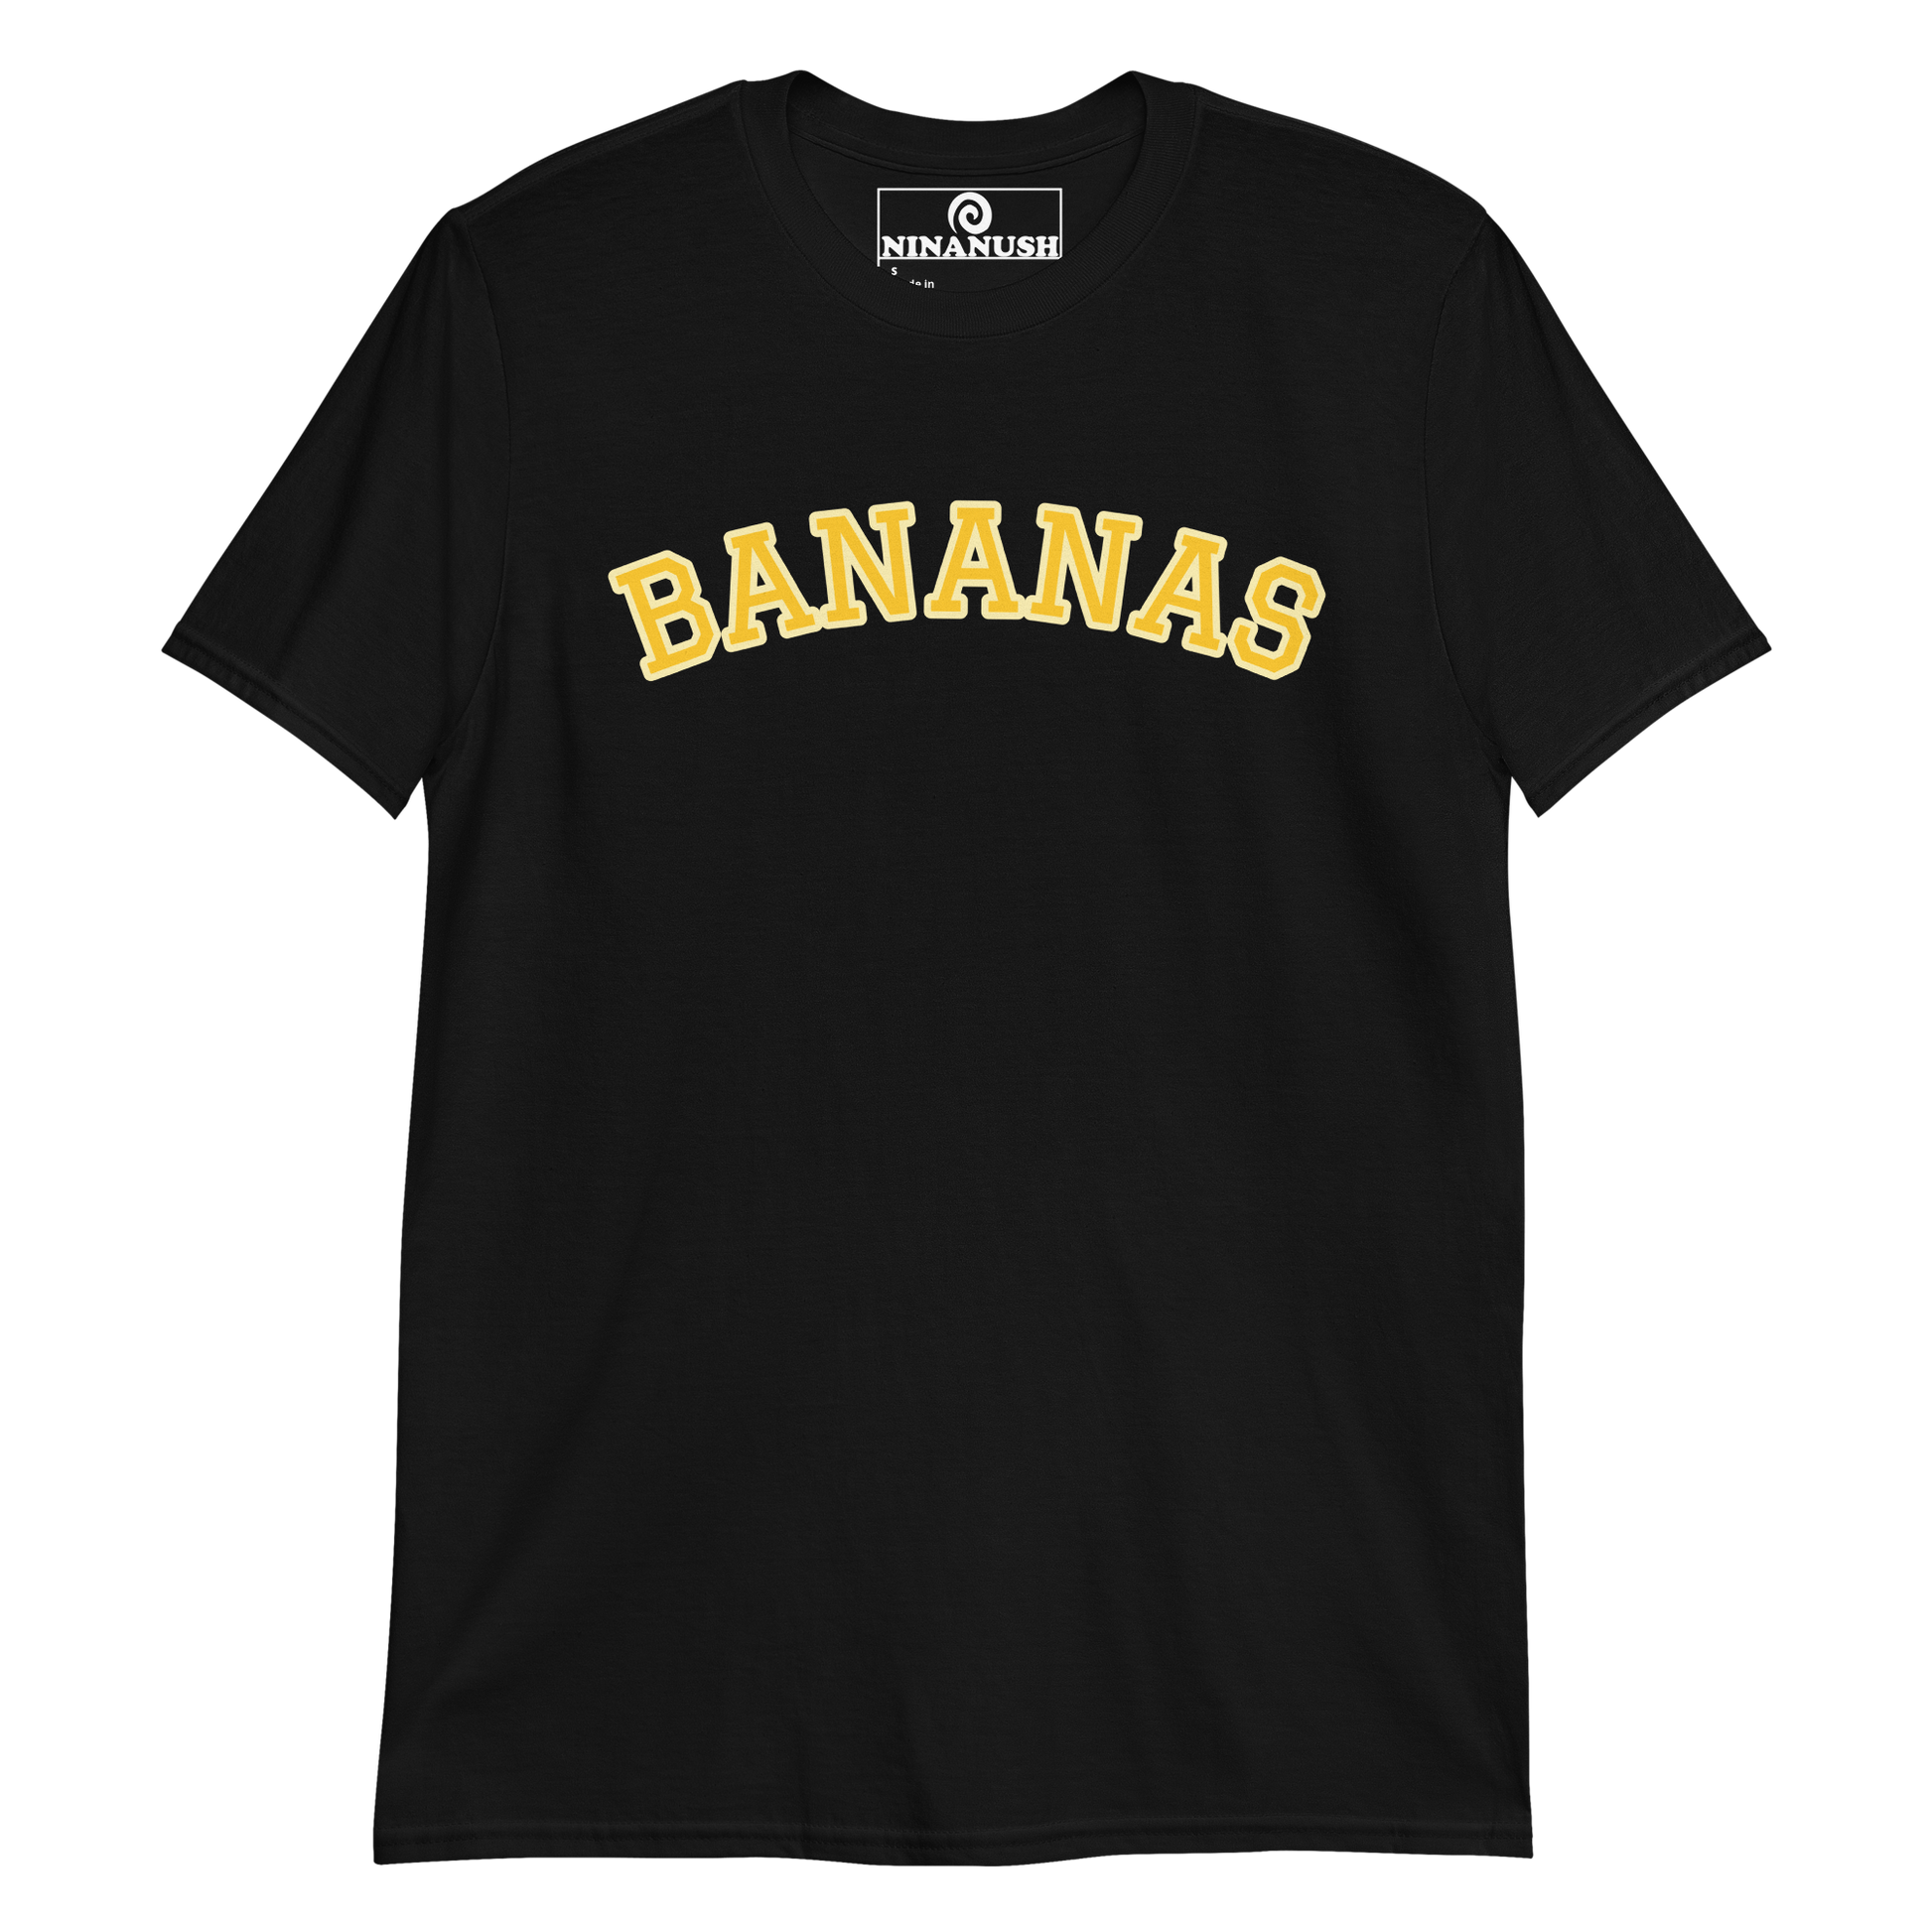 Bananas shirt